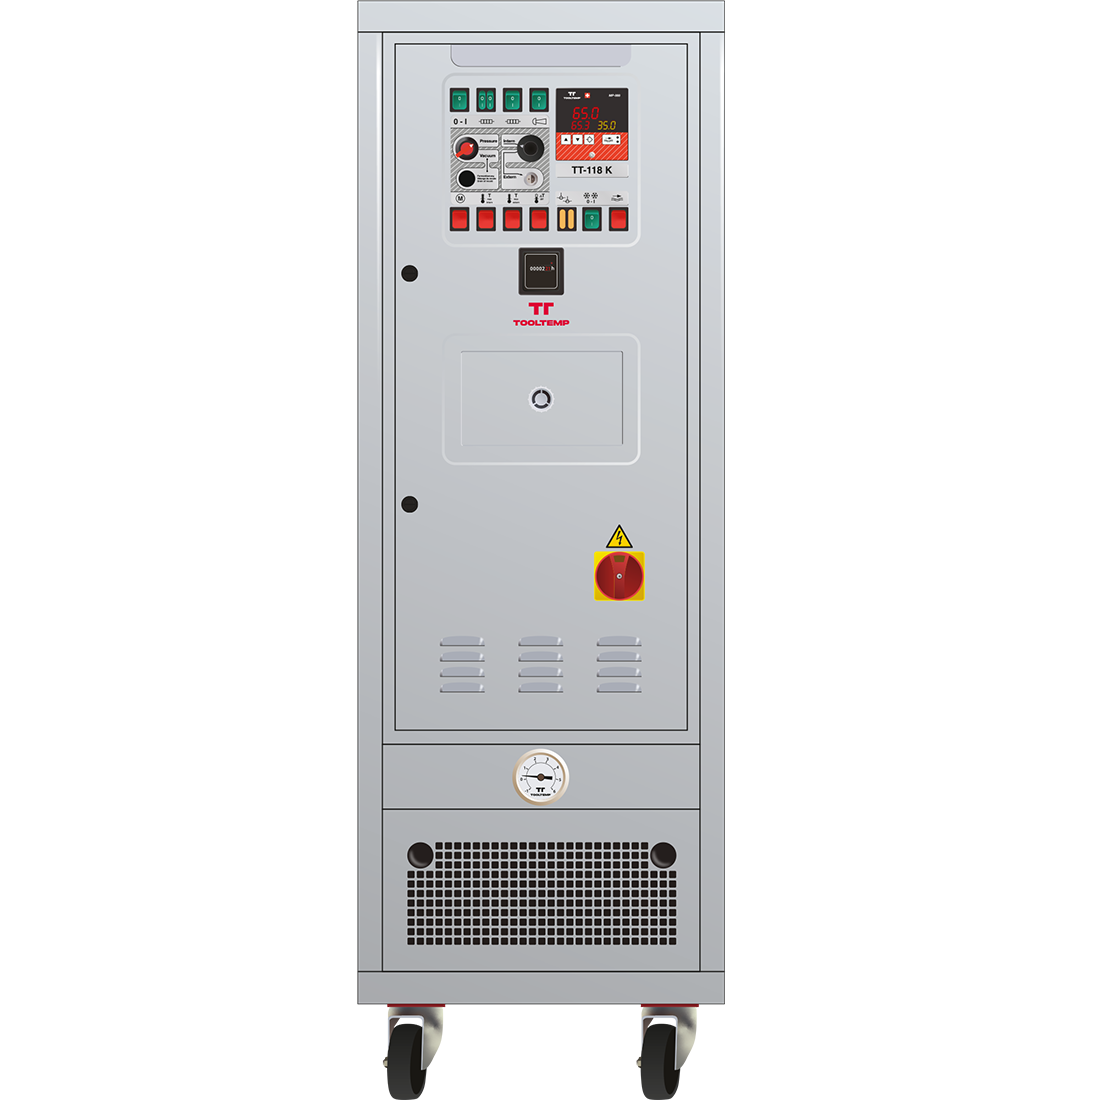 Tool-Temp - Sulu sıcaklık kontrol üniteleri - CLASSIC Water TT-118 k 18 kW